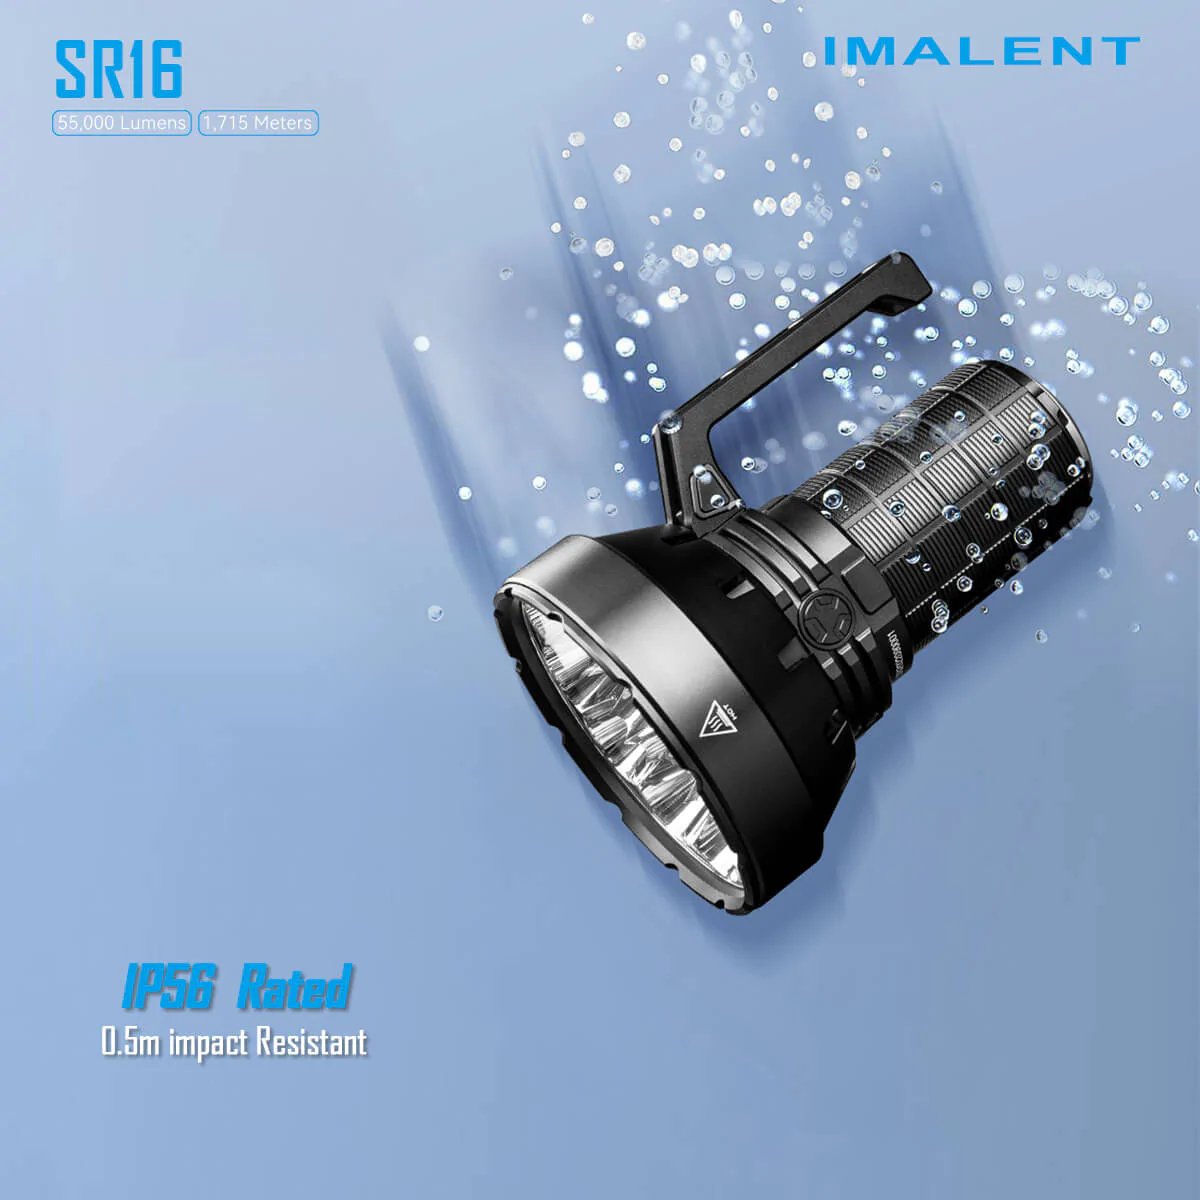 Imalent SR16 16 x  XHP50.3 HI LEDs 55000 lumen flashlight Search Flashlight